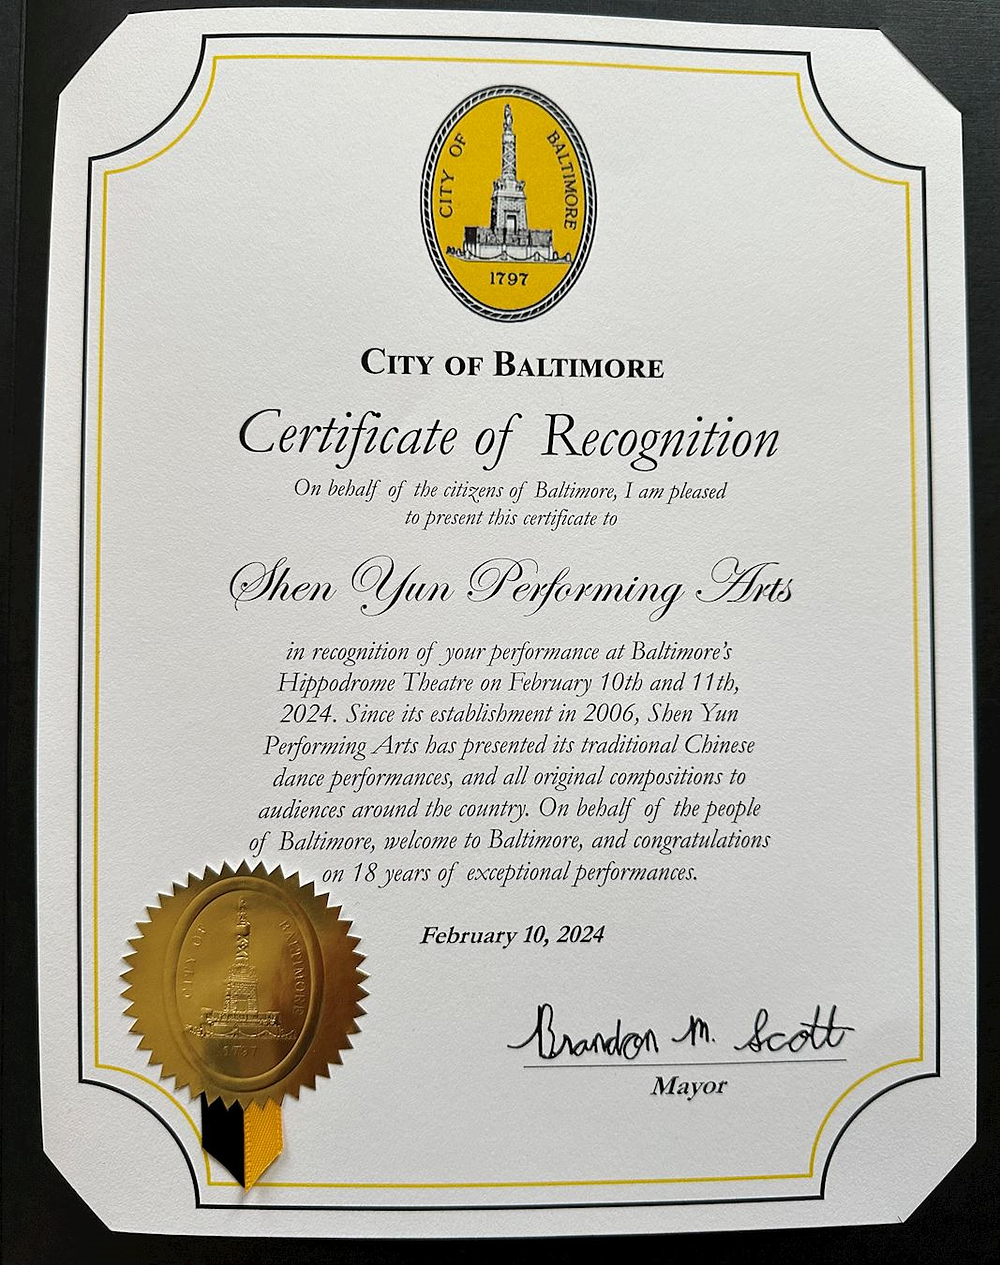 Priznanje Brandona M. Scotta, gradonačelnika Baltimora